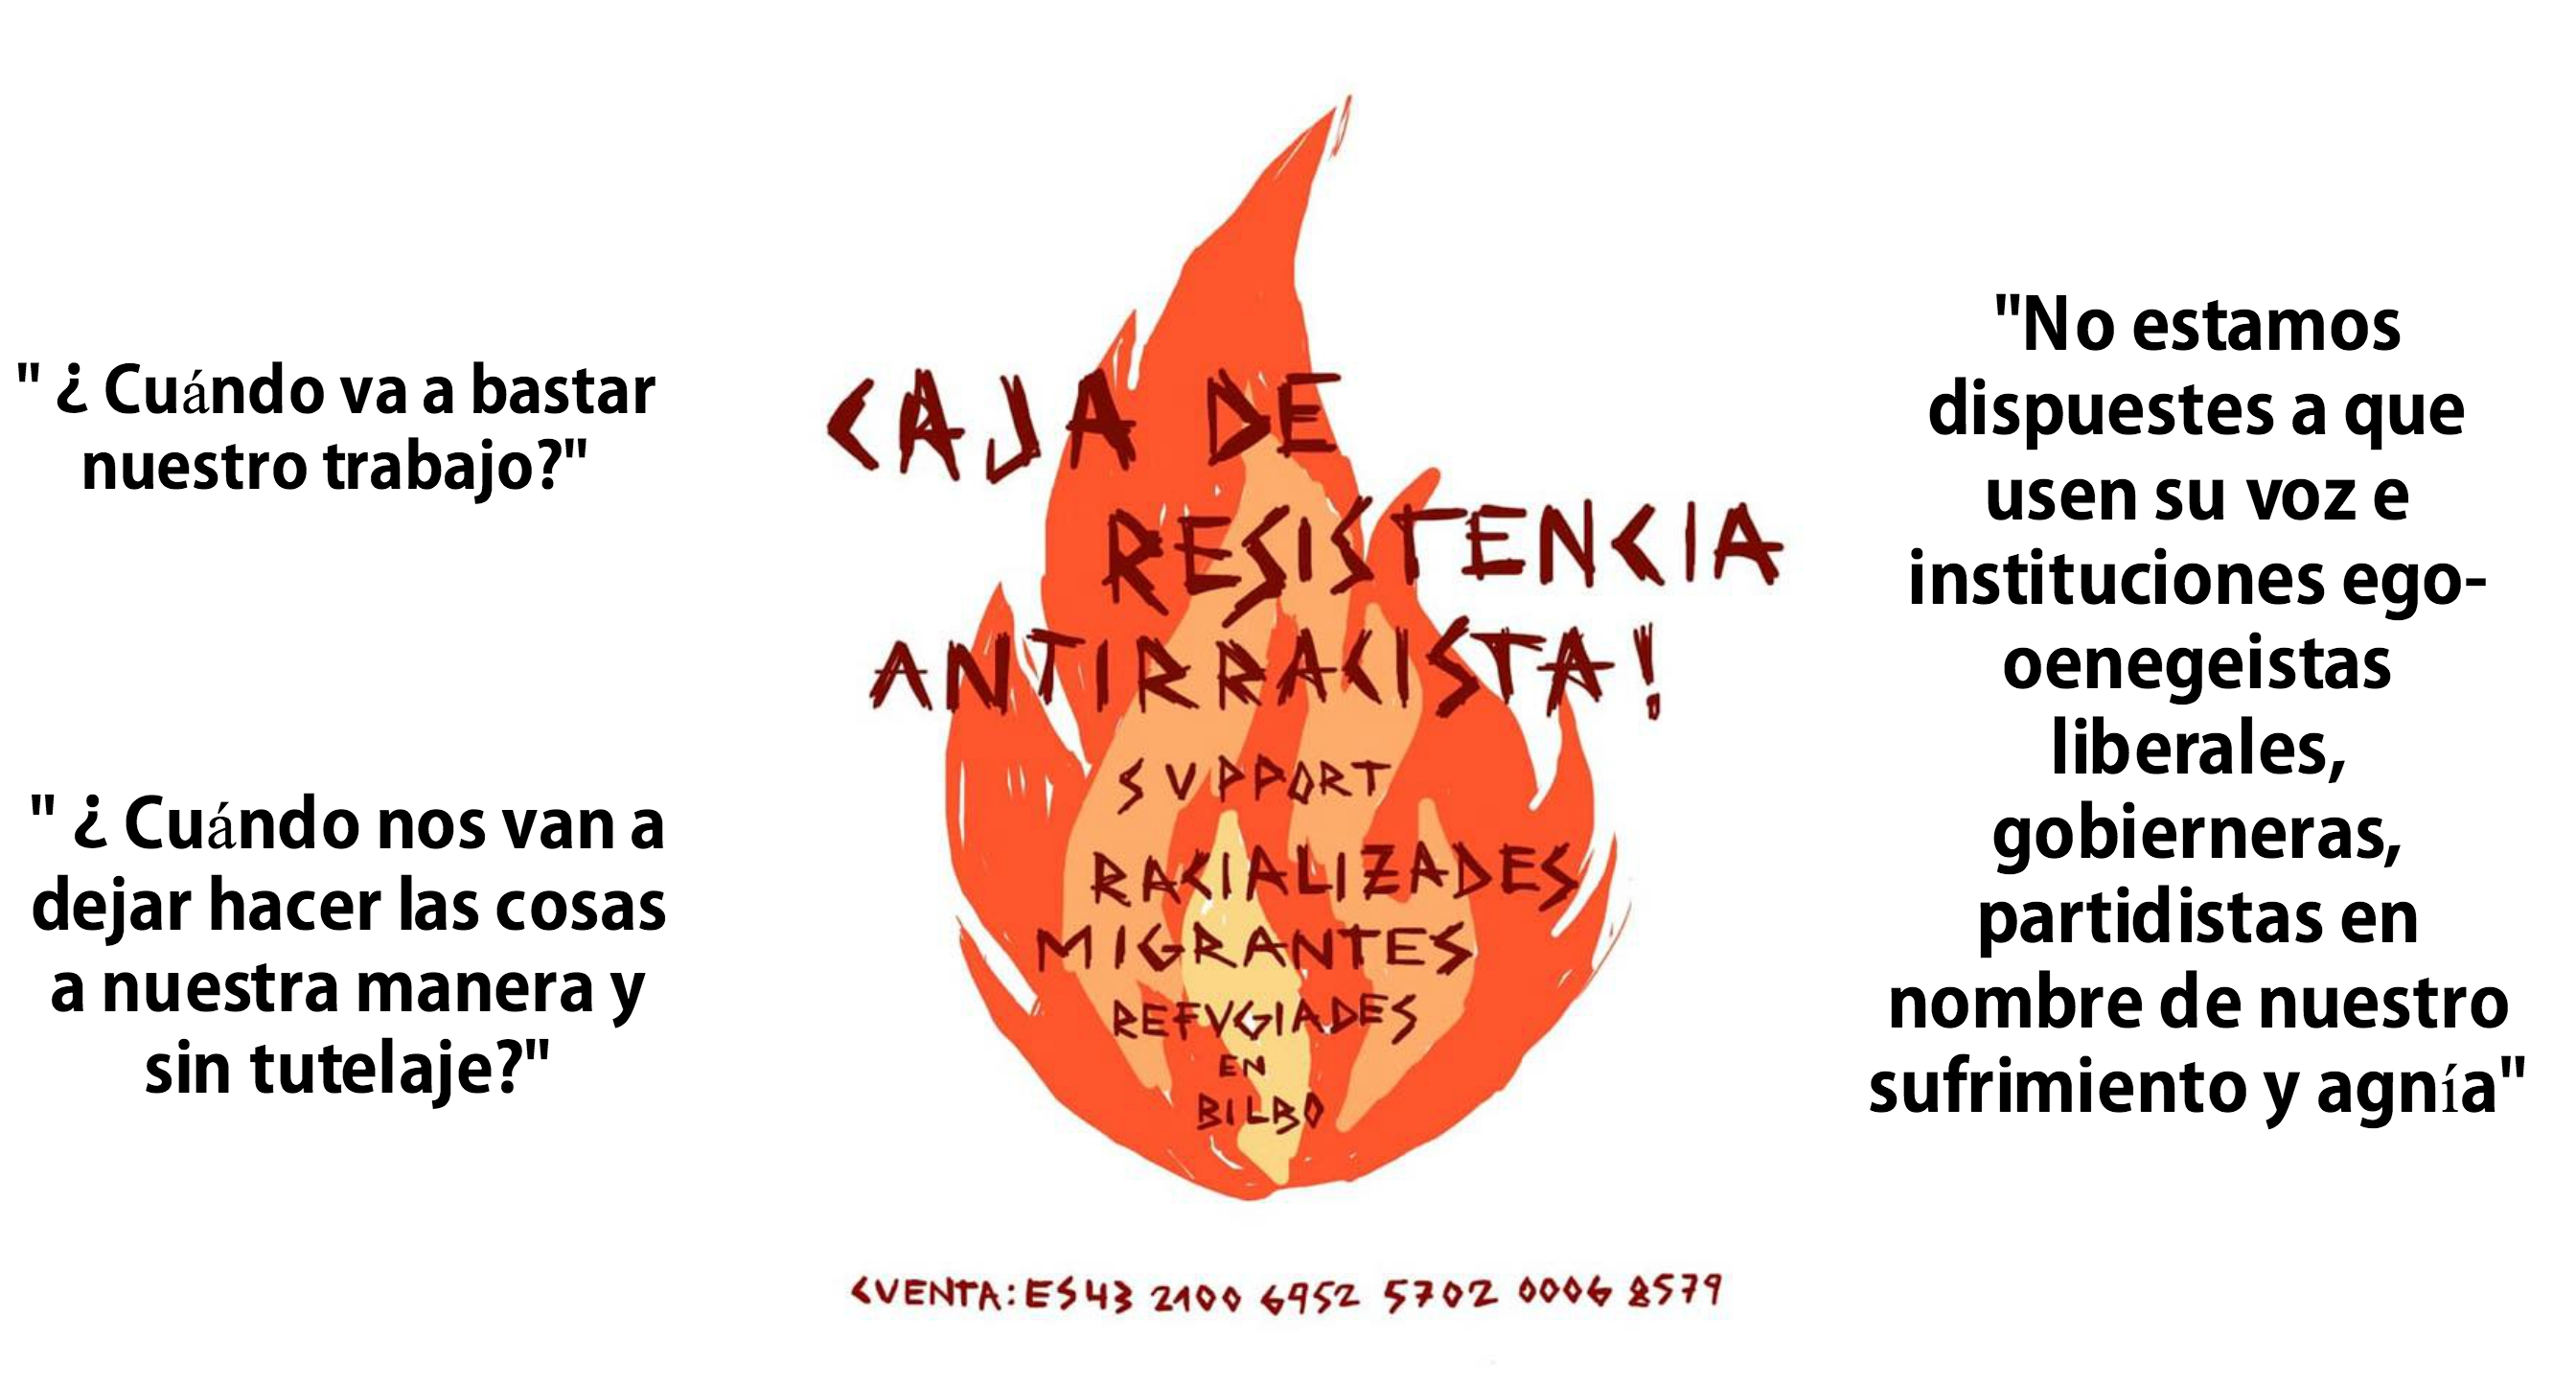 caja-resistencia-bizihotsa-euskalherria-antiracista-bilbao-migrantes-refugiados-colonial-paternalista